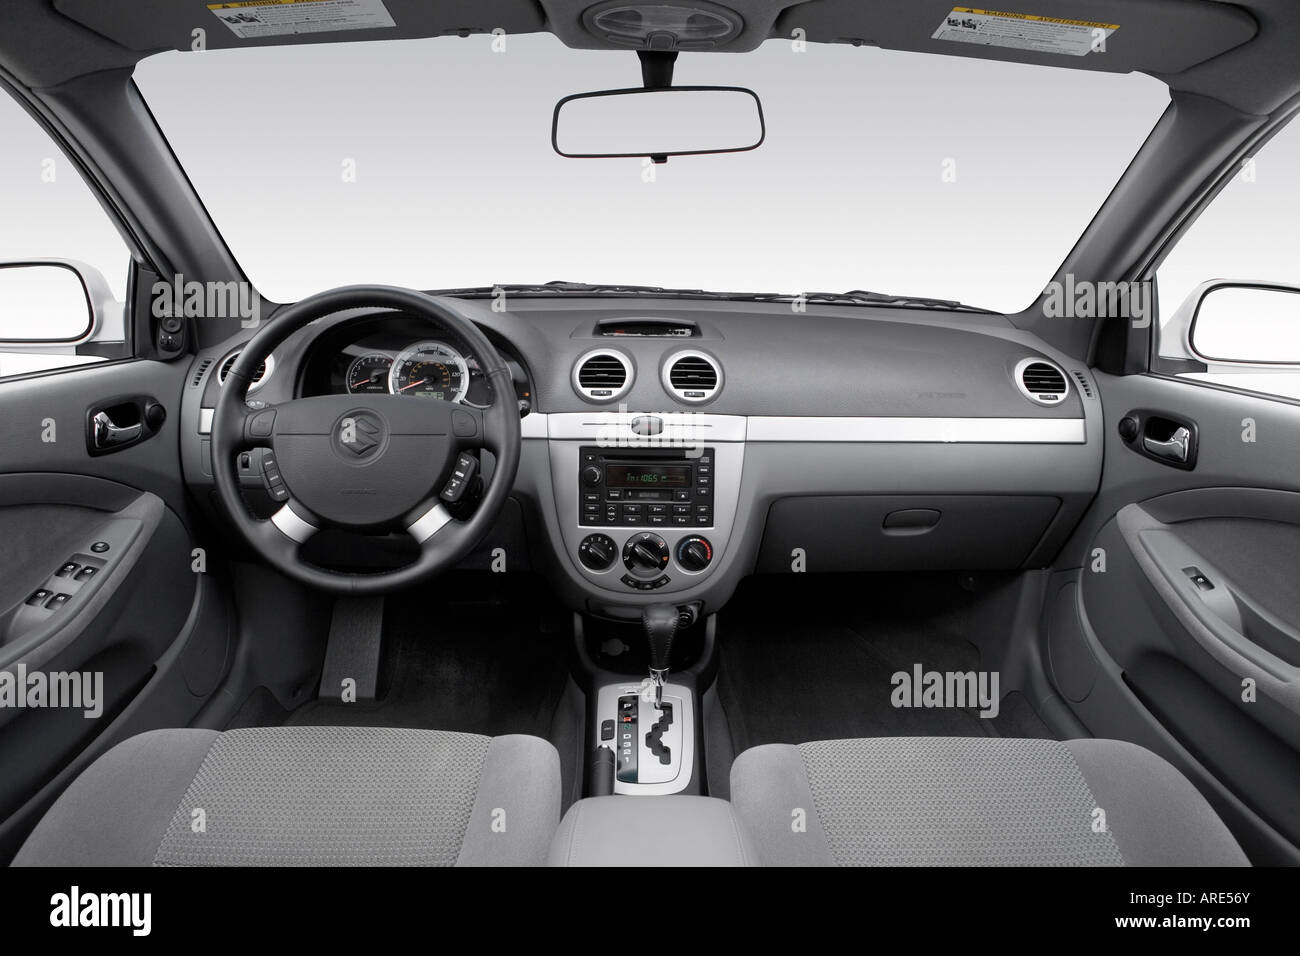 2006 Suzuki Forenza in Silver - Dashboard, center console, gear shifter  view Stock Photo - Alamy